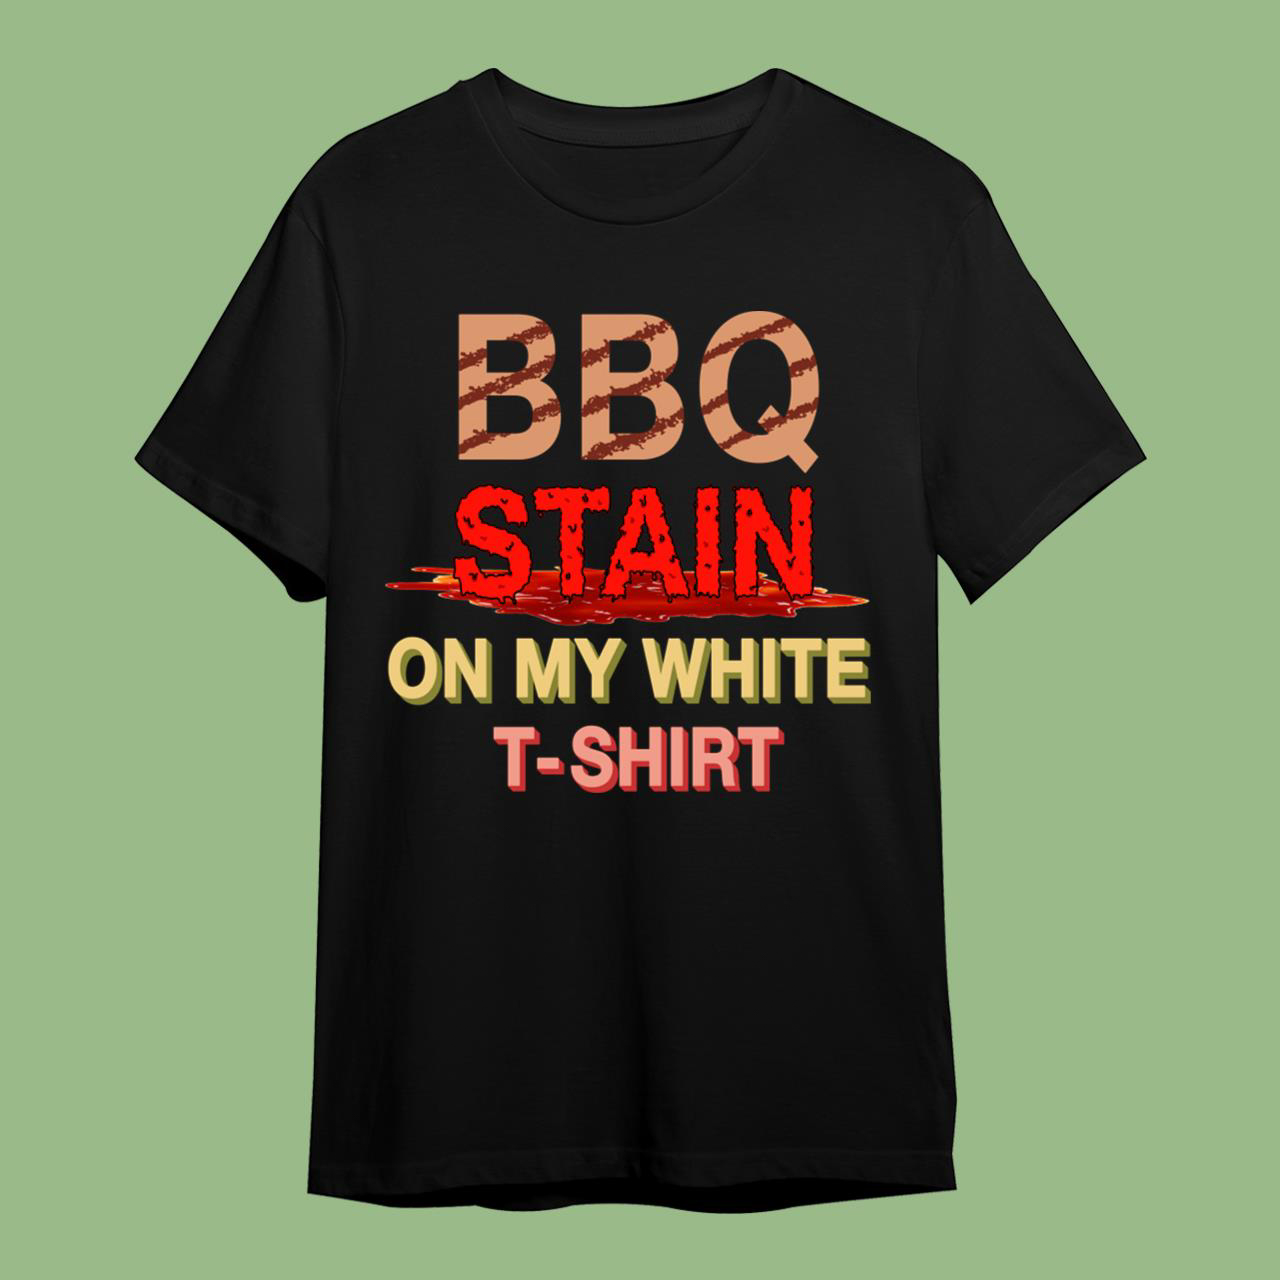 BBQ Stain On My White T-shirt Replicated T-shirt